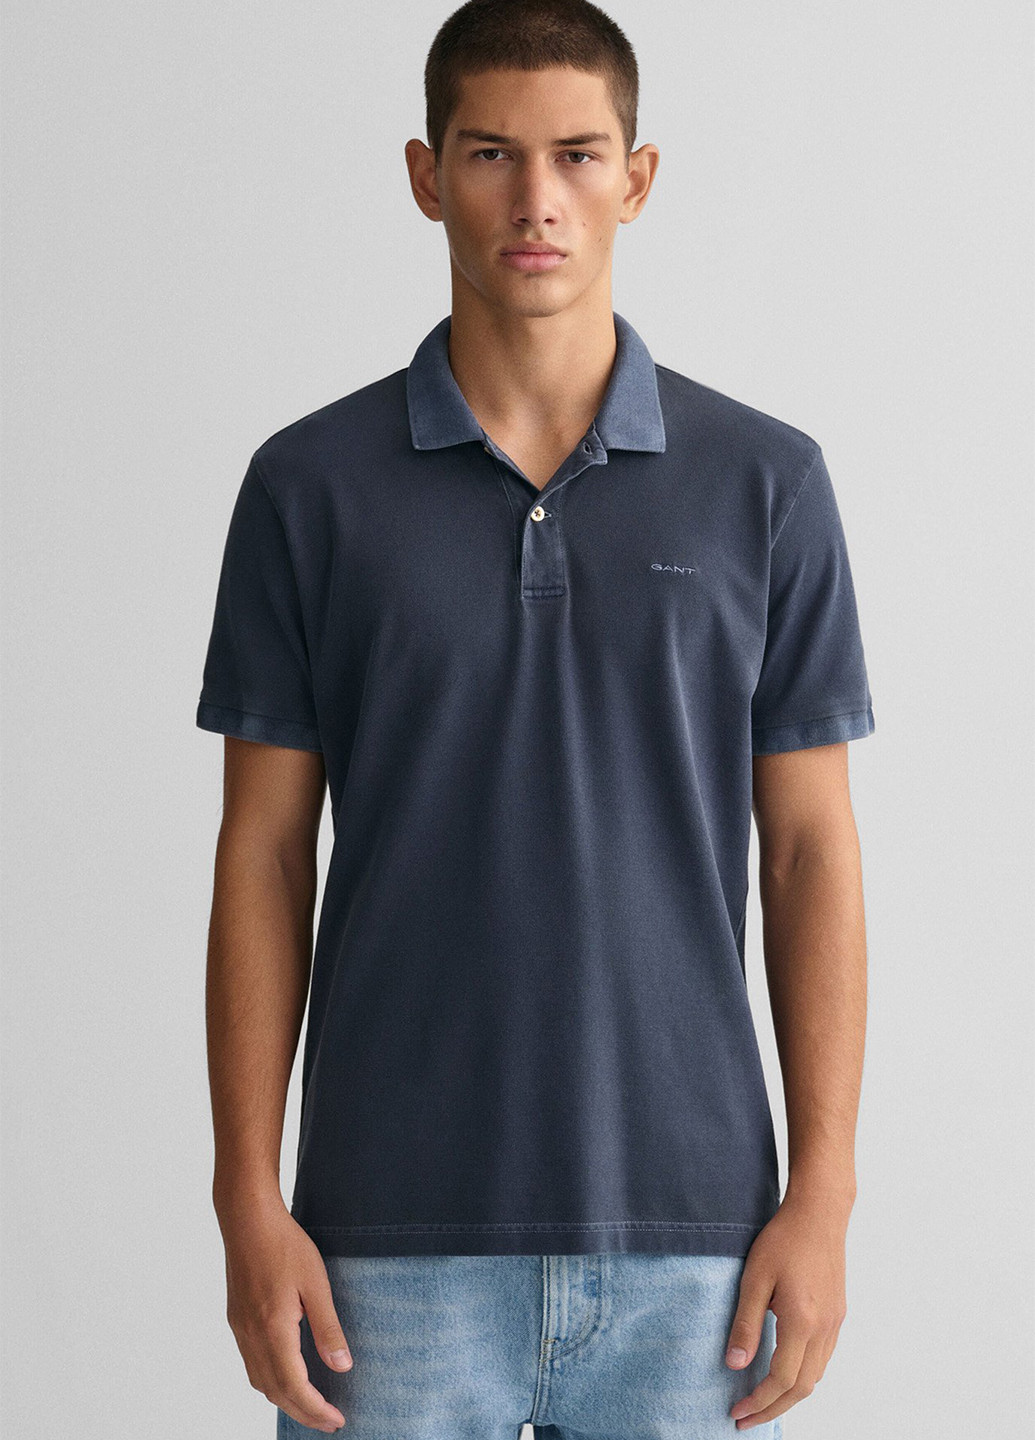 Серо-голубой футболка-поло для мужчин Gant однотонная